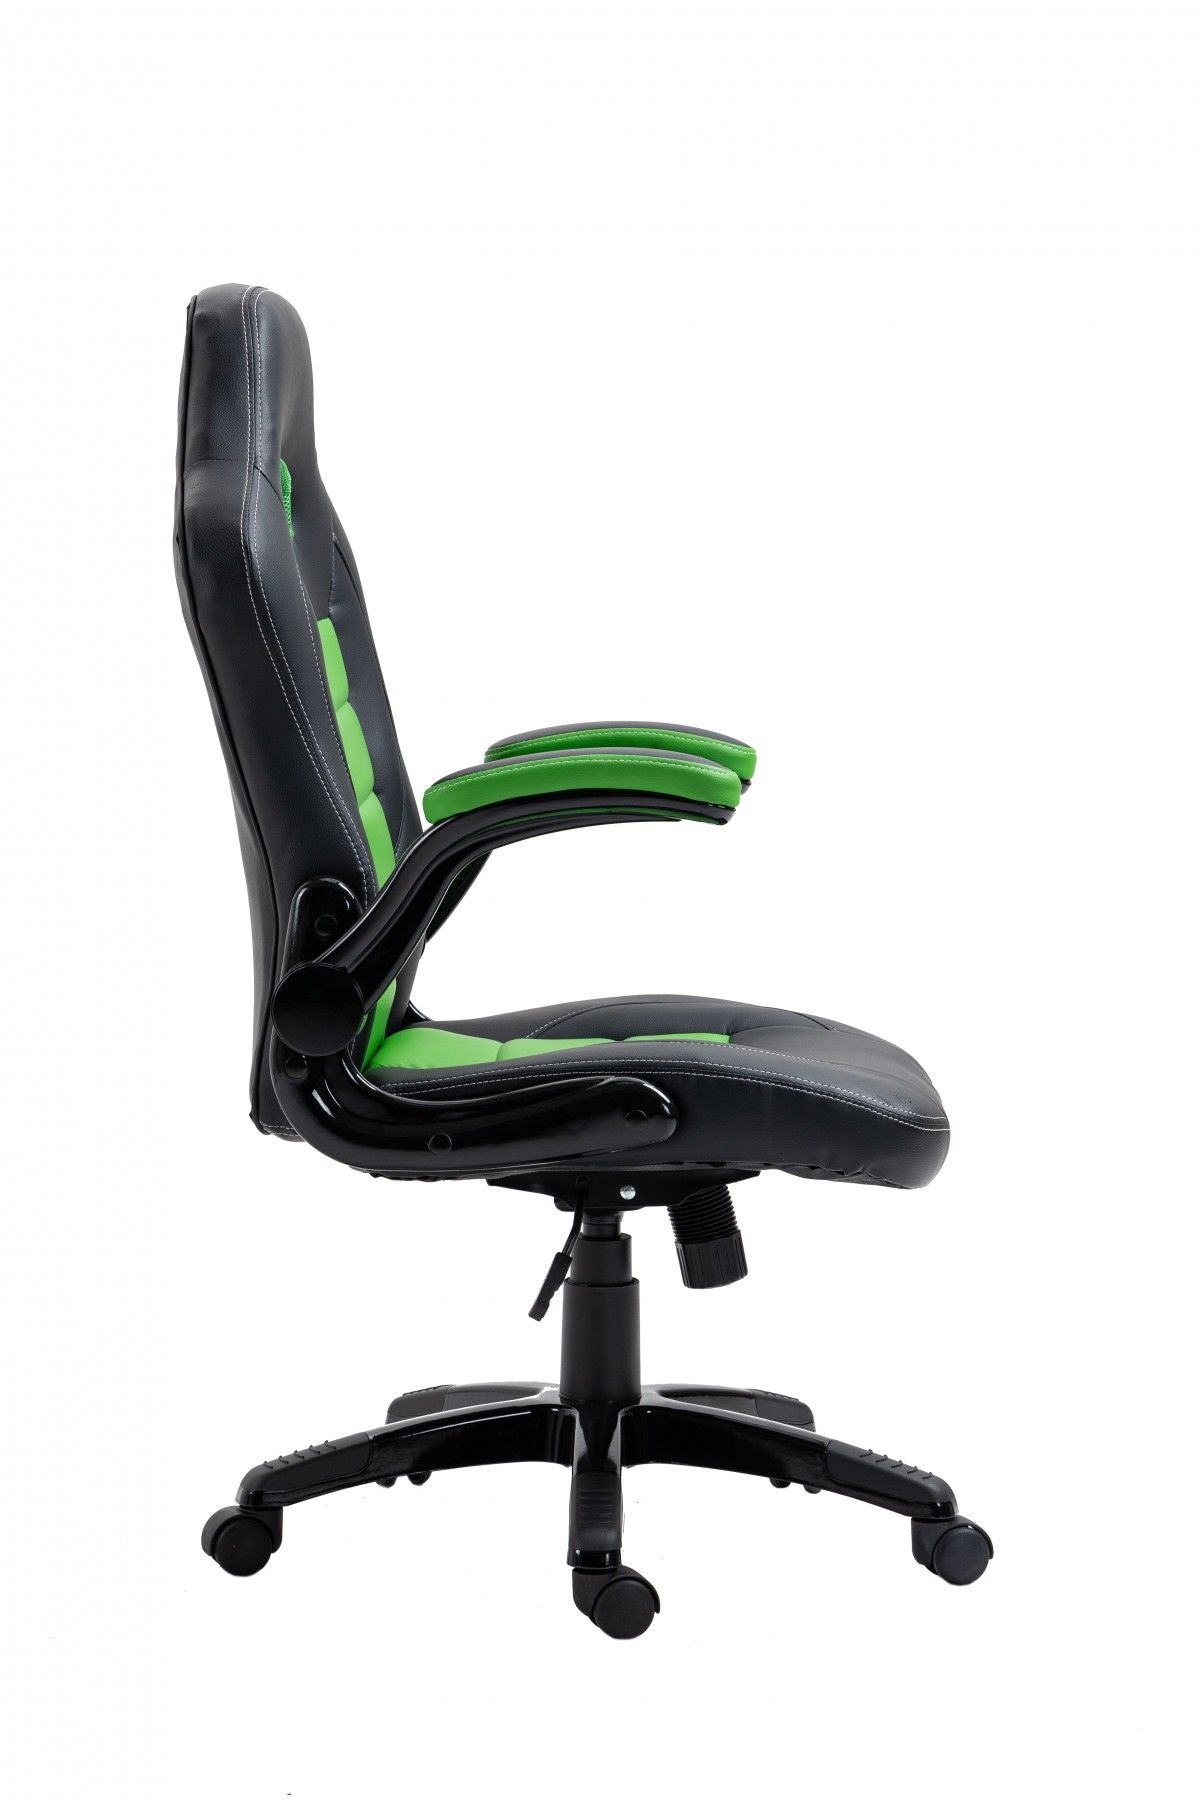 Brennan Gaming Chair - Green and Black